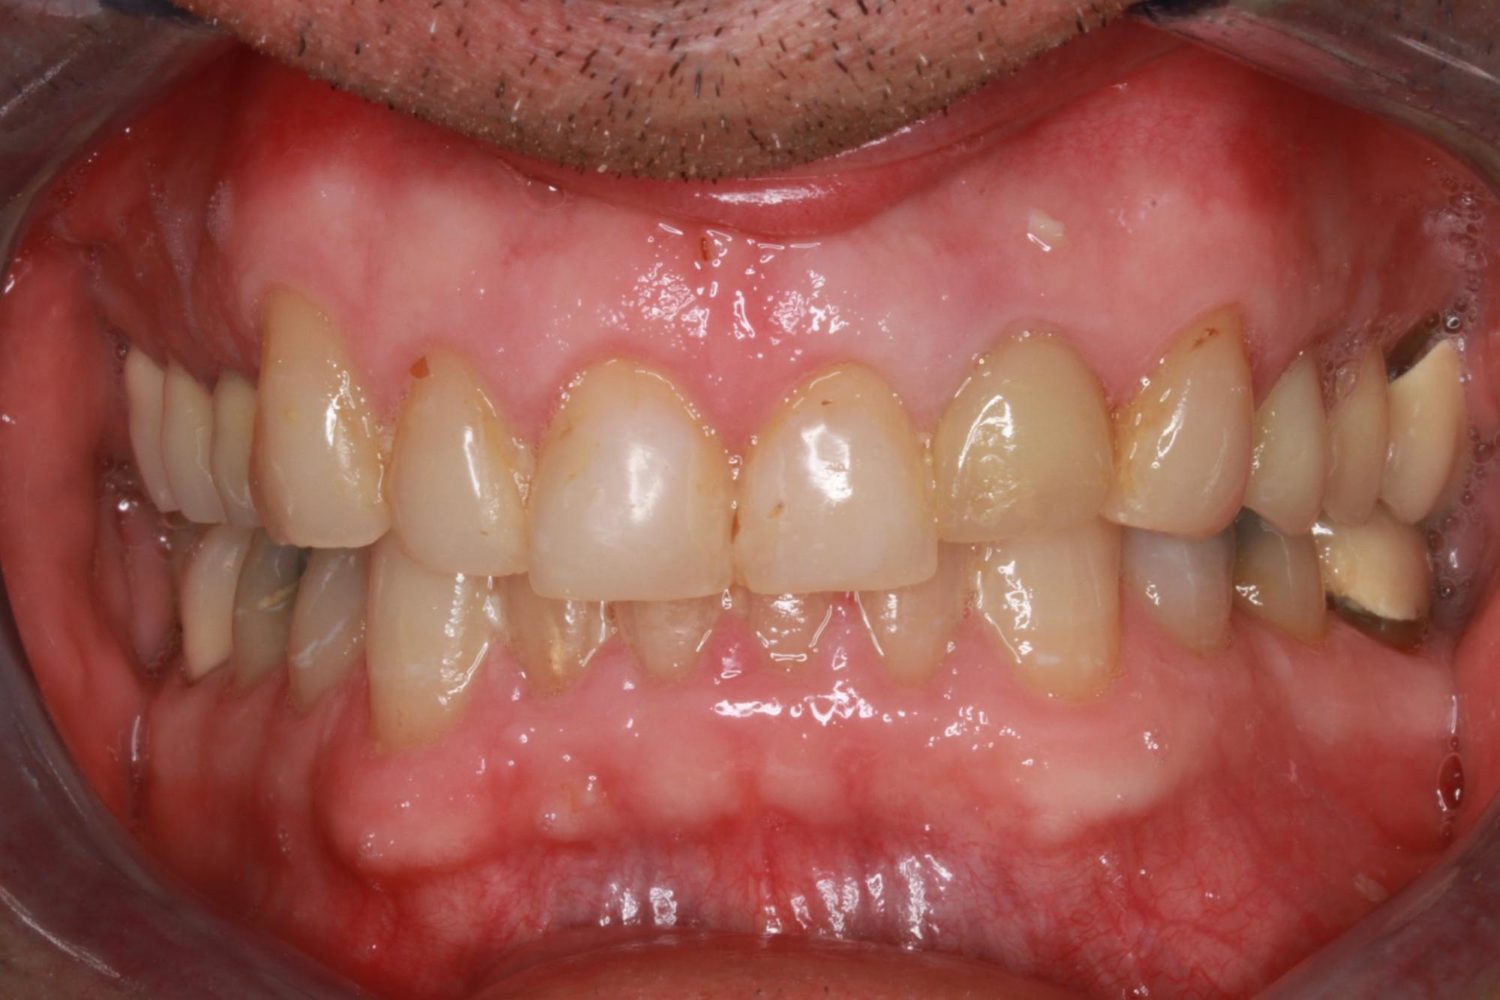 Before Major Restorative Dental Treatment